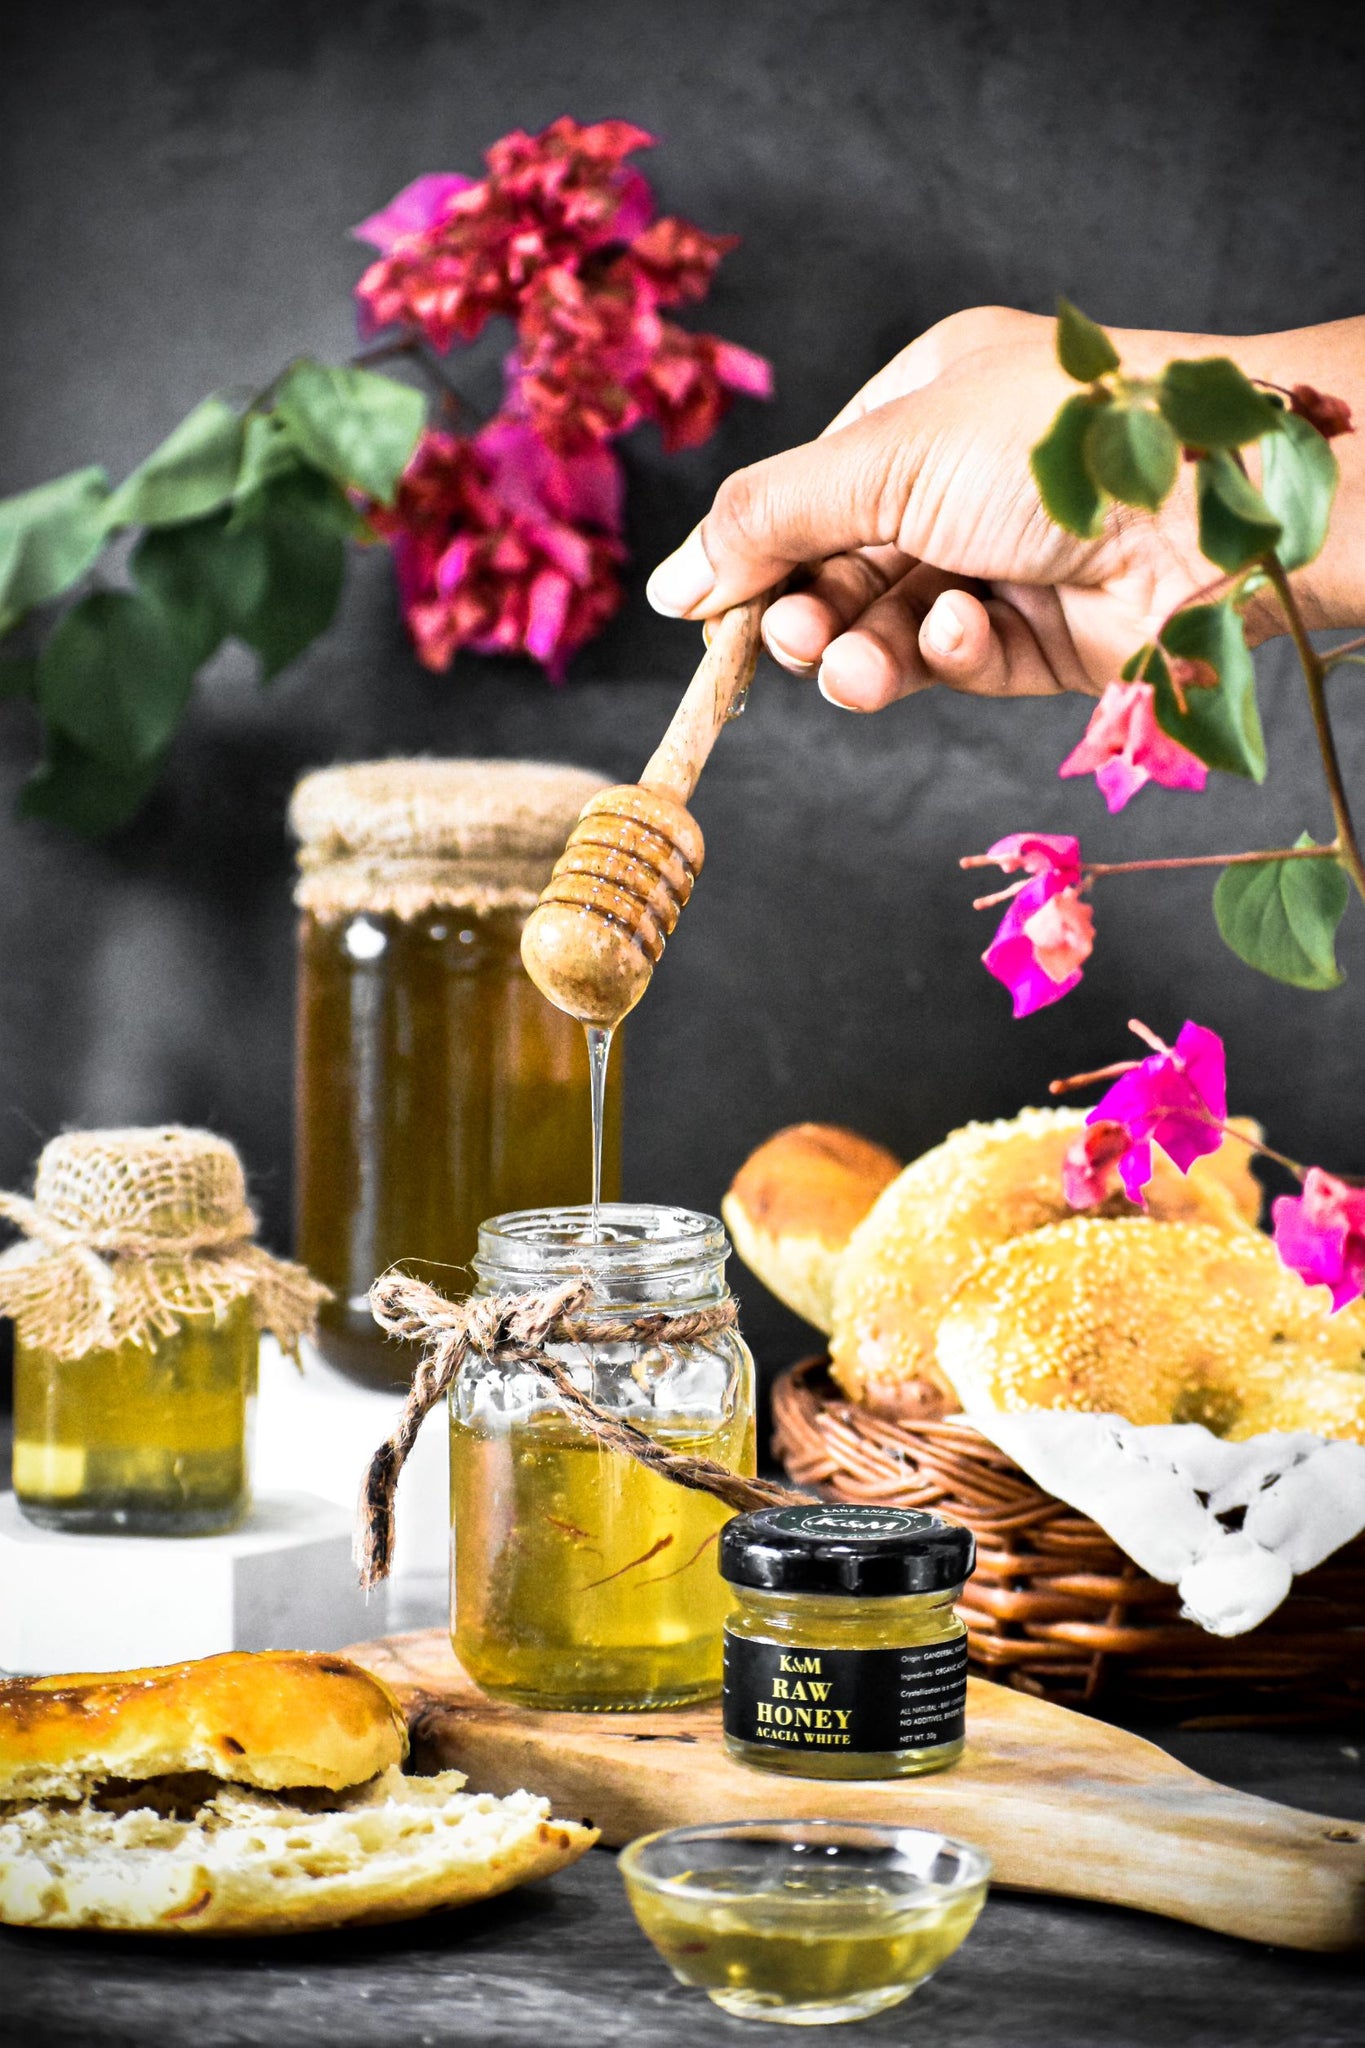 K&M Kashmiri Acacia Honey - 100% Raw & Natural / Kashmiri Saffron Honey